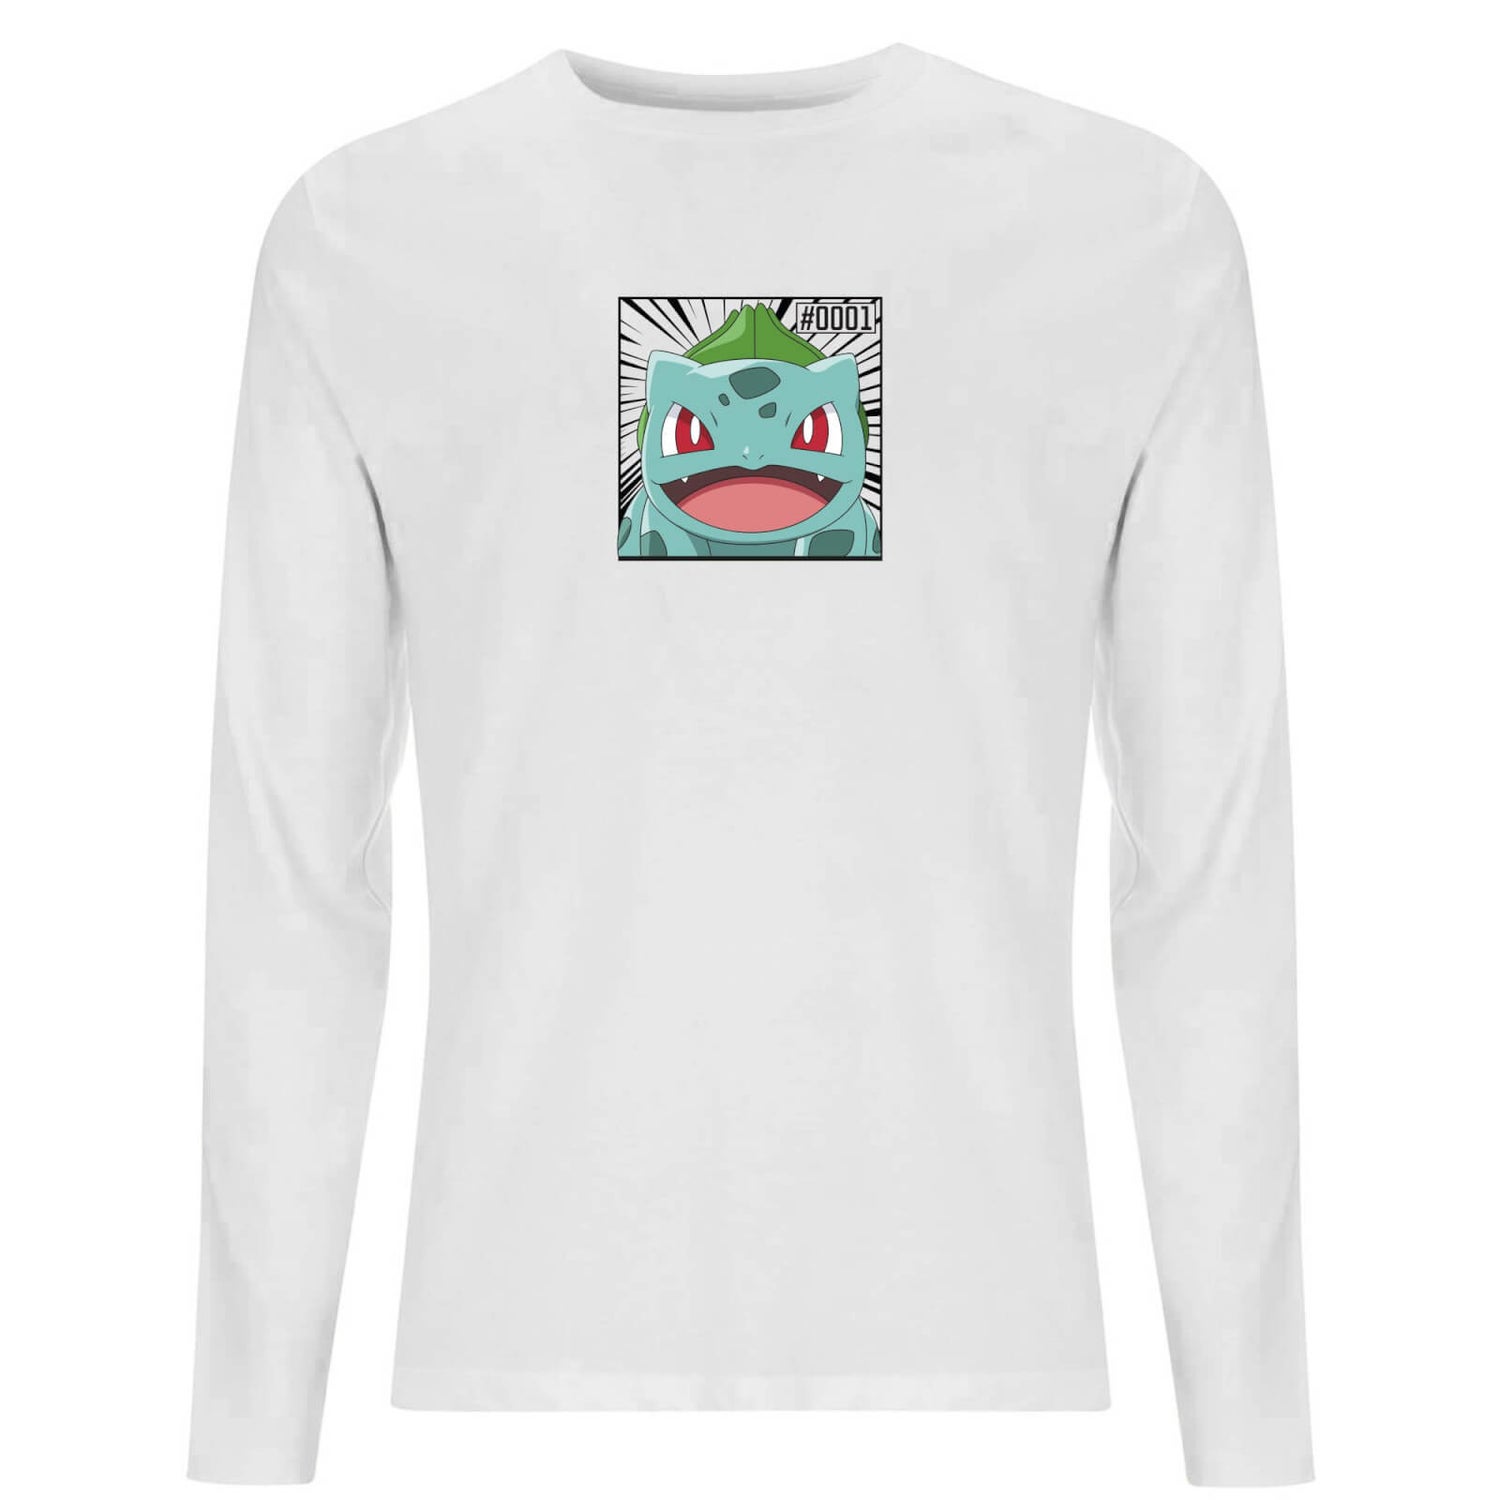 Pokémon Pokédex Bulbasaur #0001 Men's Long Sleeve T-Shirt - White